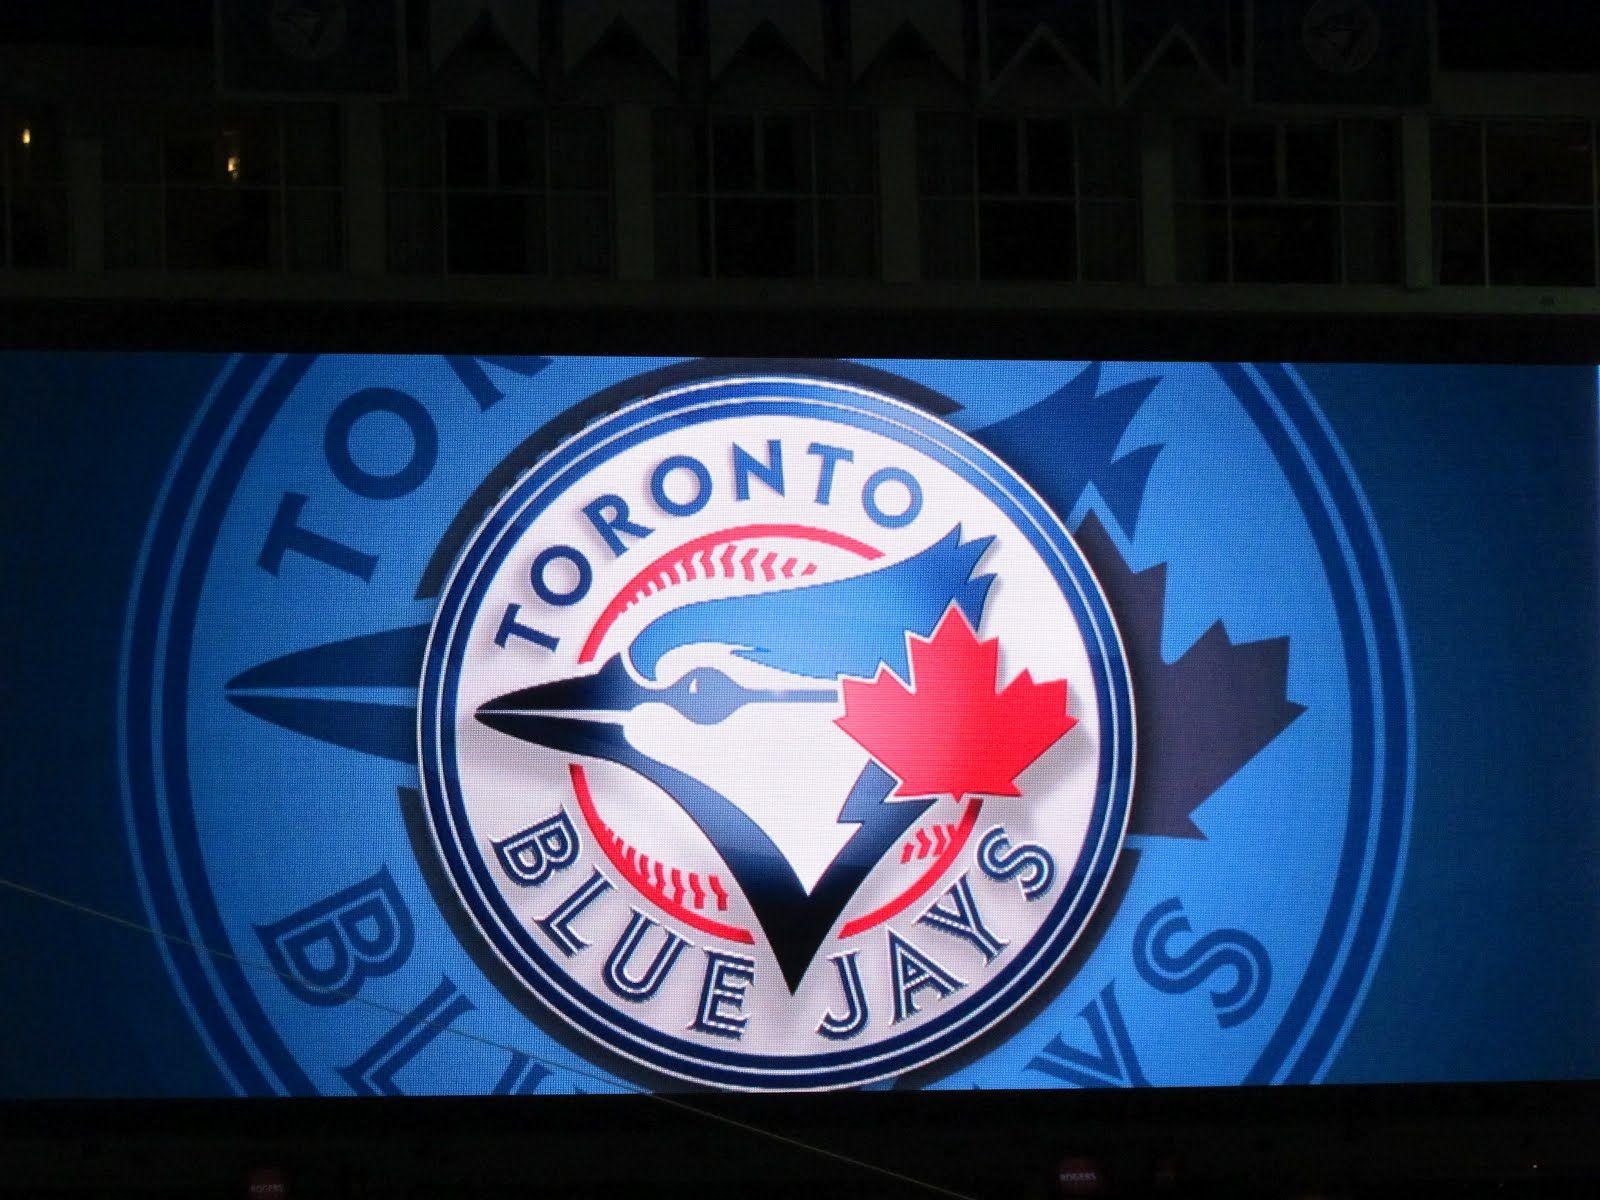 Toronto Blue Jays Image. Original HDQ Wallpaper Collection